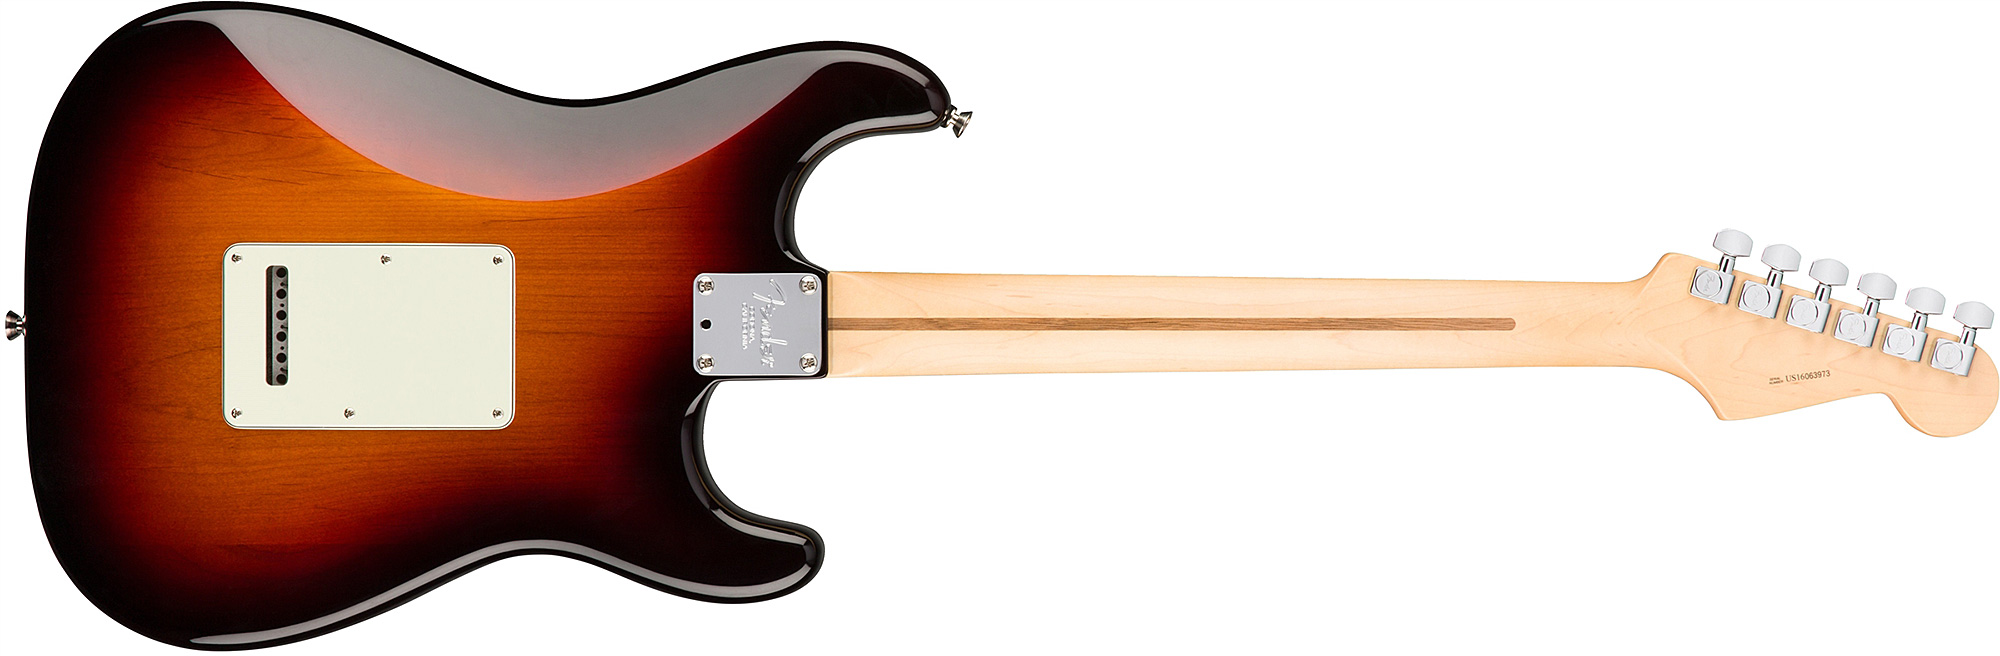 Fender Strat American Professional Lh Usa Gaucher 3s Mn - 3-color Sunburst - Left-handed electric guitar - Variation 1